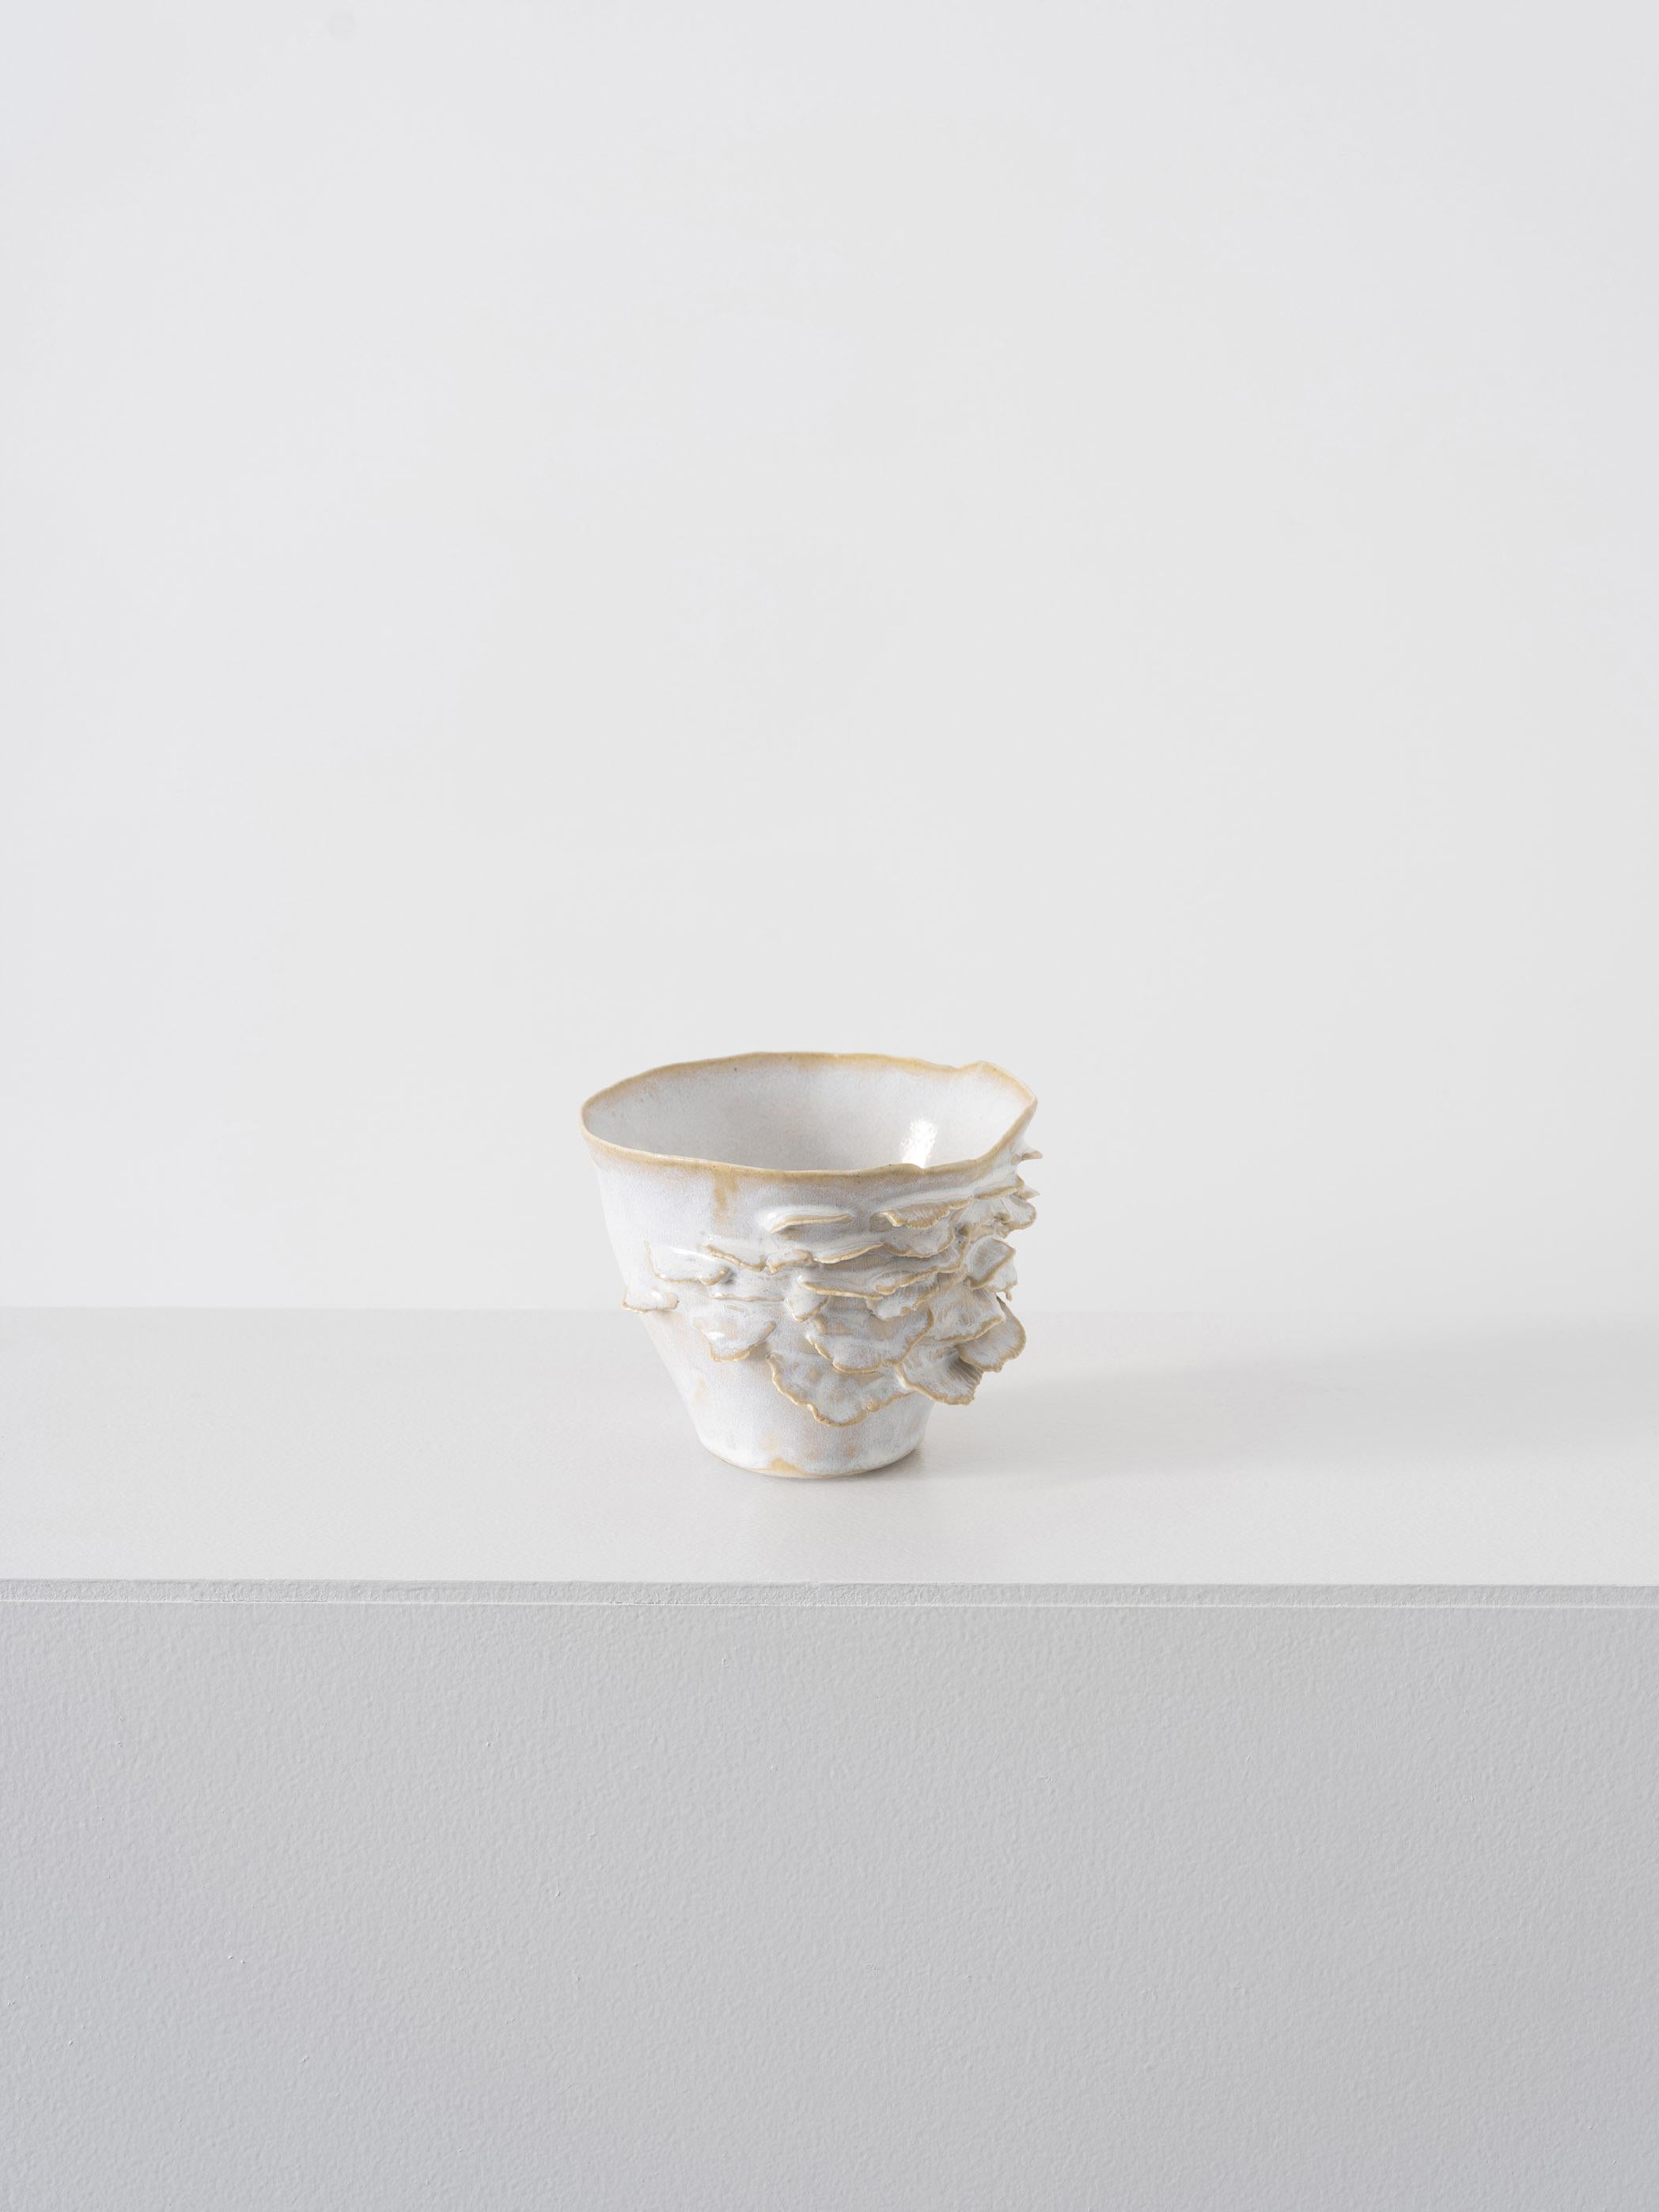 Trish DeMasi.
Lichene Vessel, 2022.
Glazed ceramic.
Measures: 5.5 x 5.5 x 4.5 in.